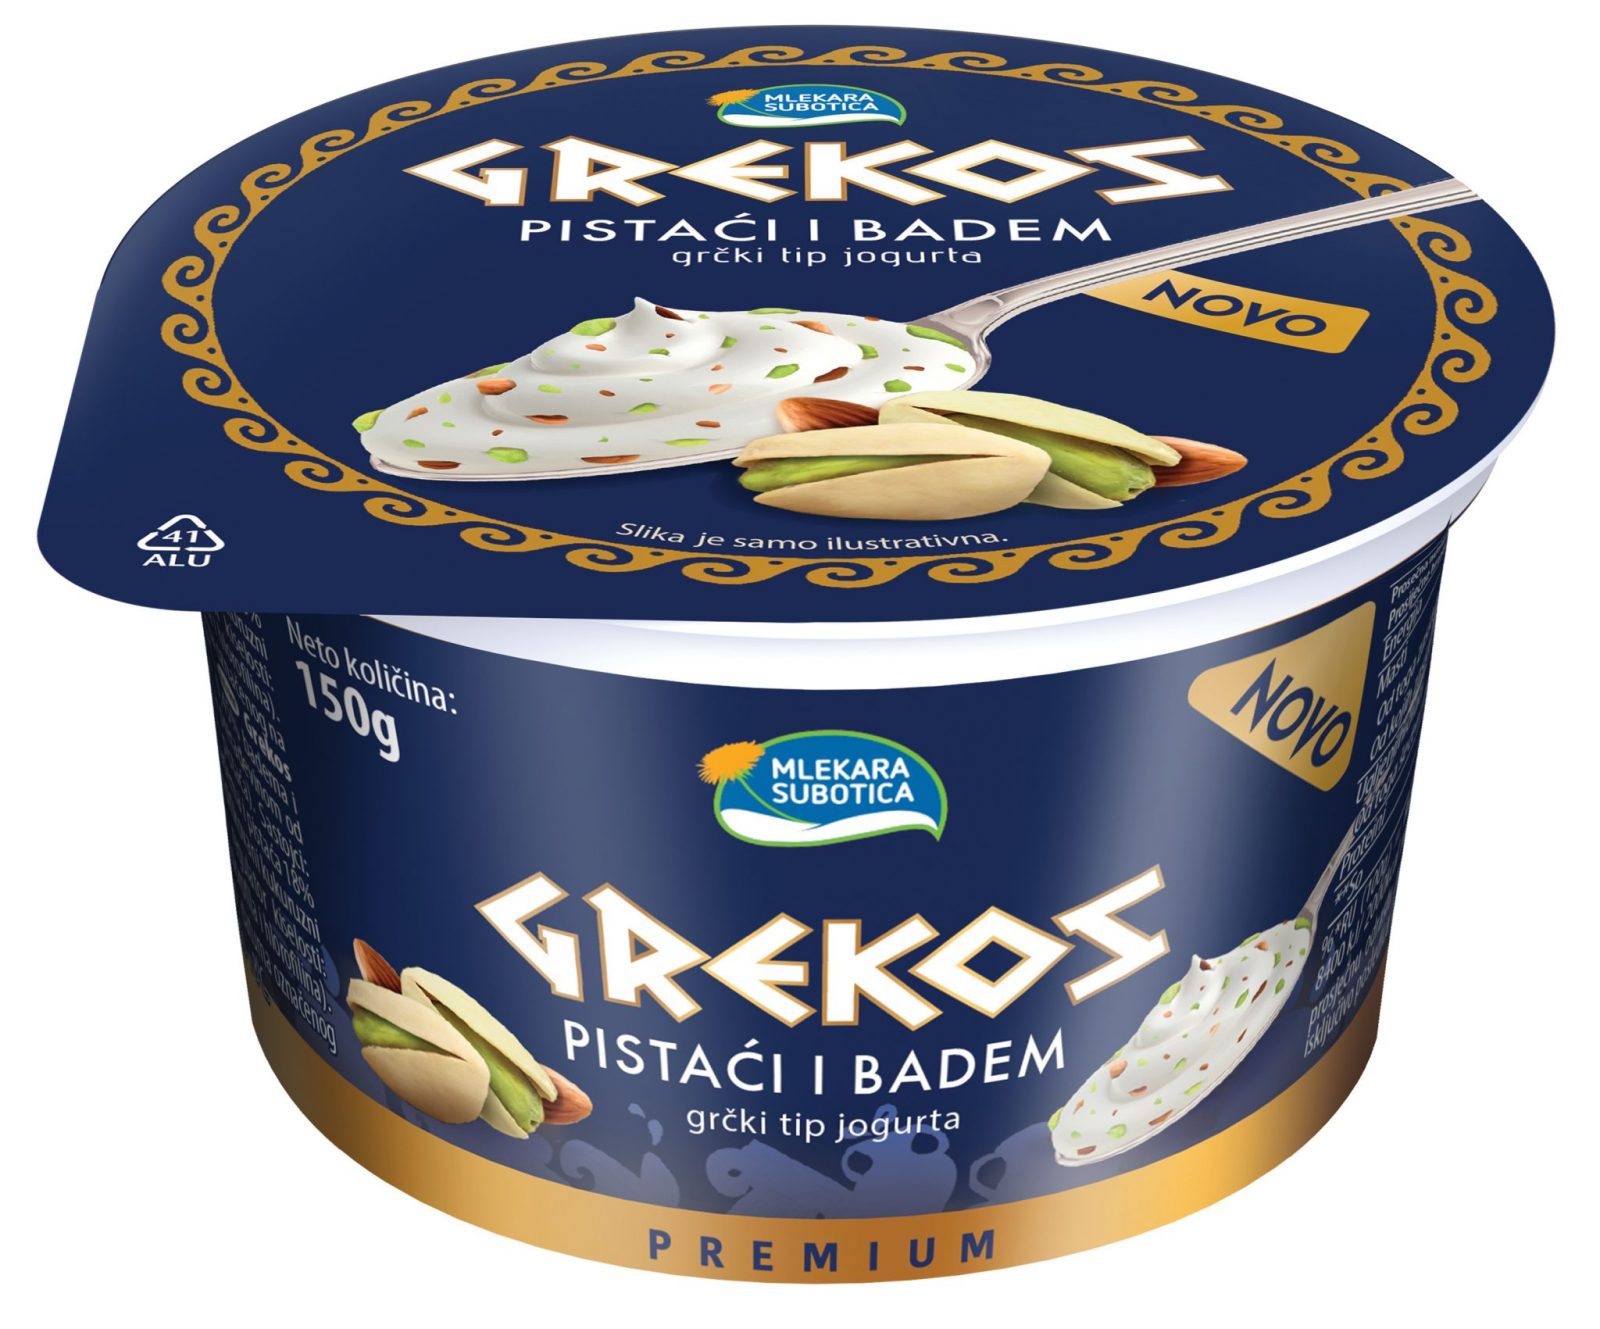 Novi ukus Grekos jogurta – pistaći i badem